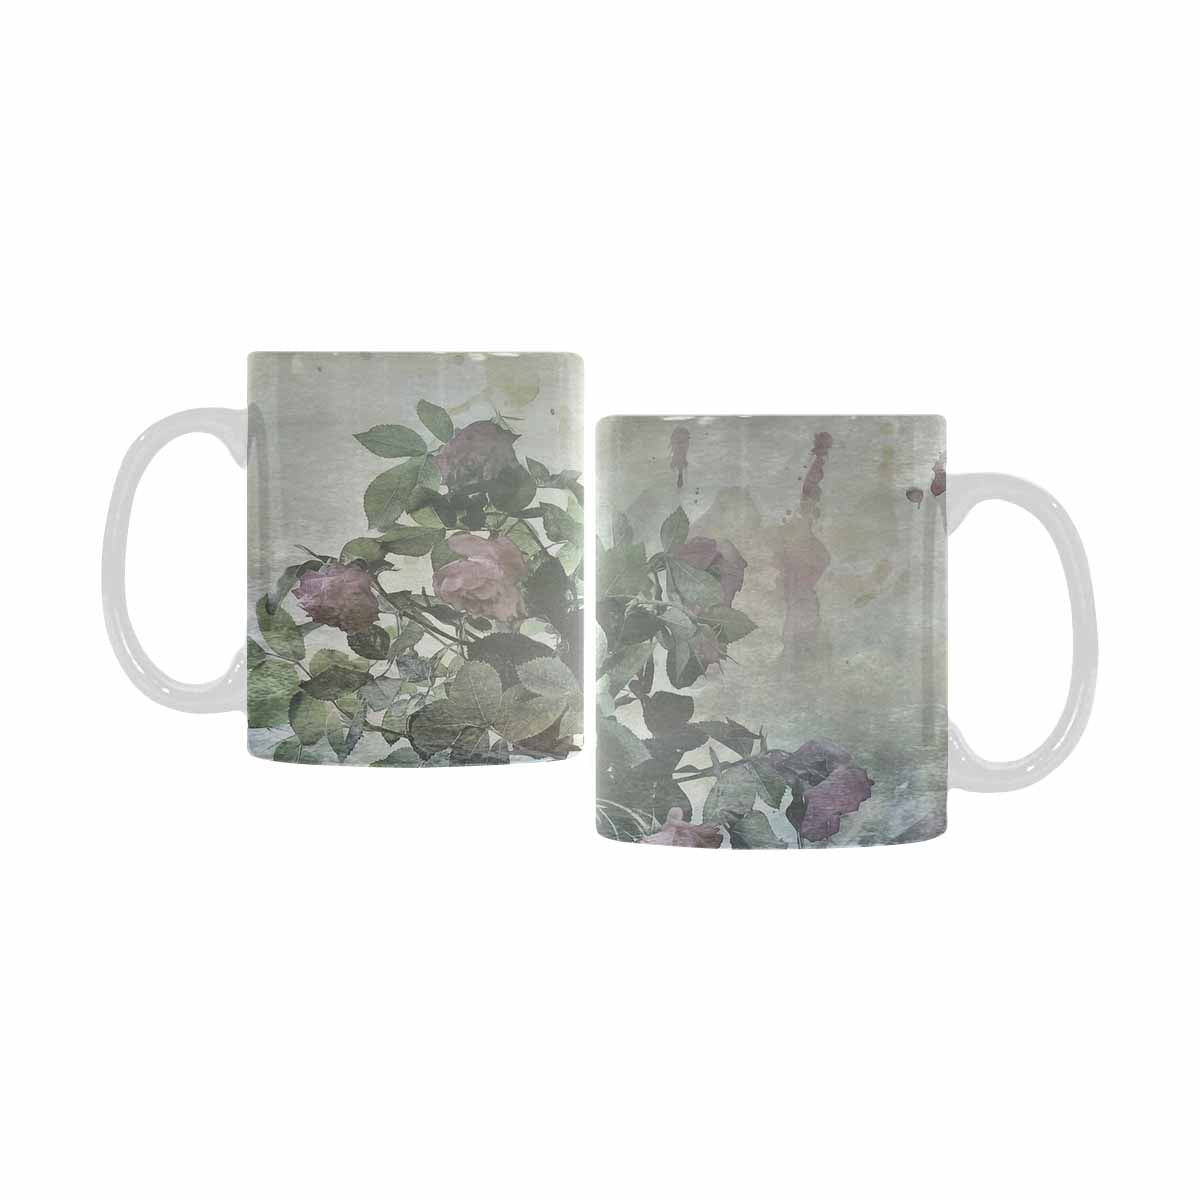 Vintage floral coffee mug or tea cup, Design 23